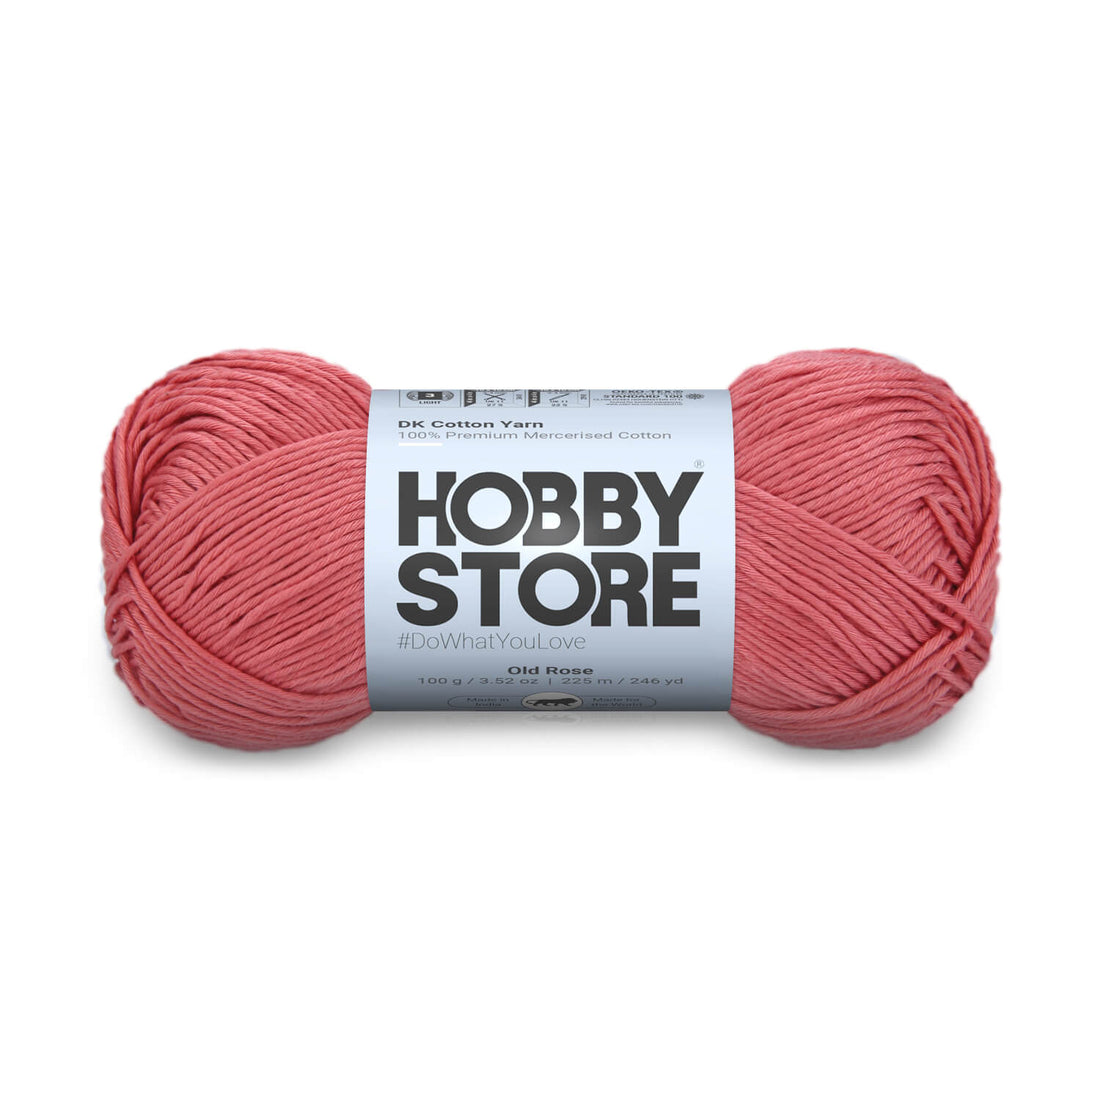 DK Mercerised Cotton Yarn by Hobby Store - Old Rose - 334